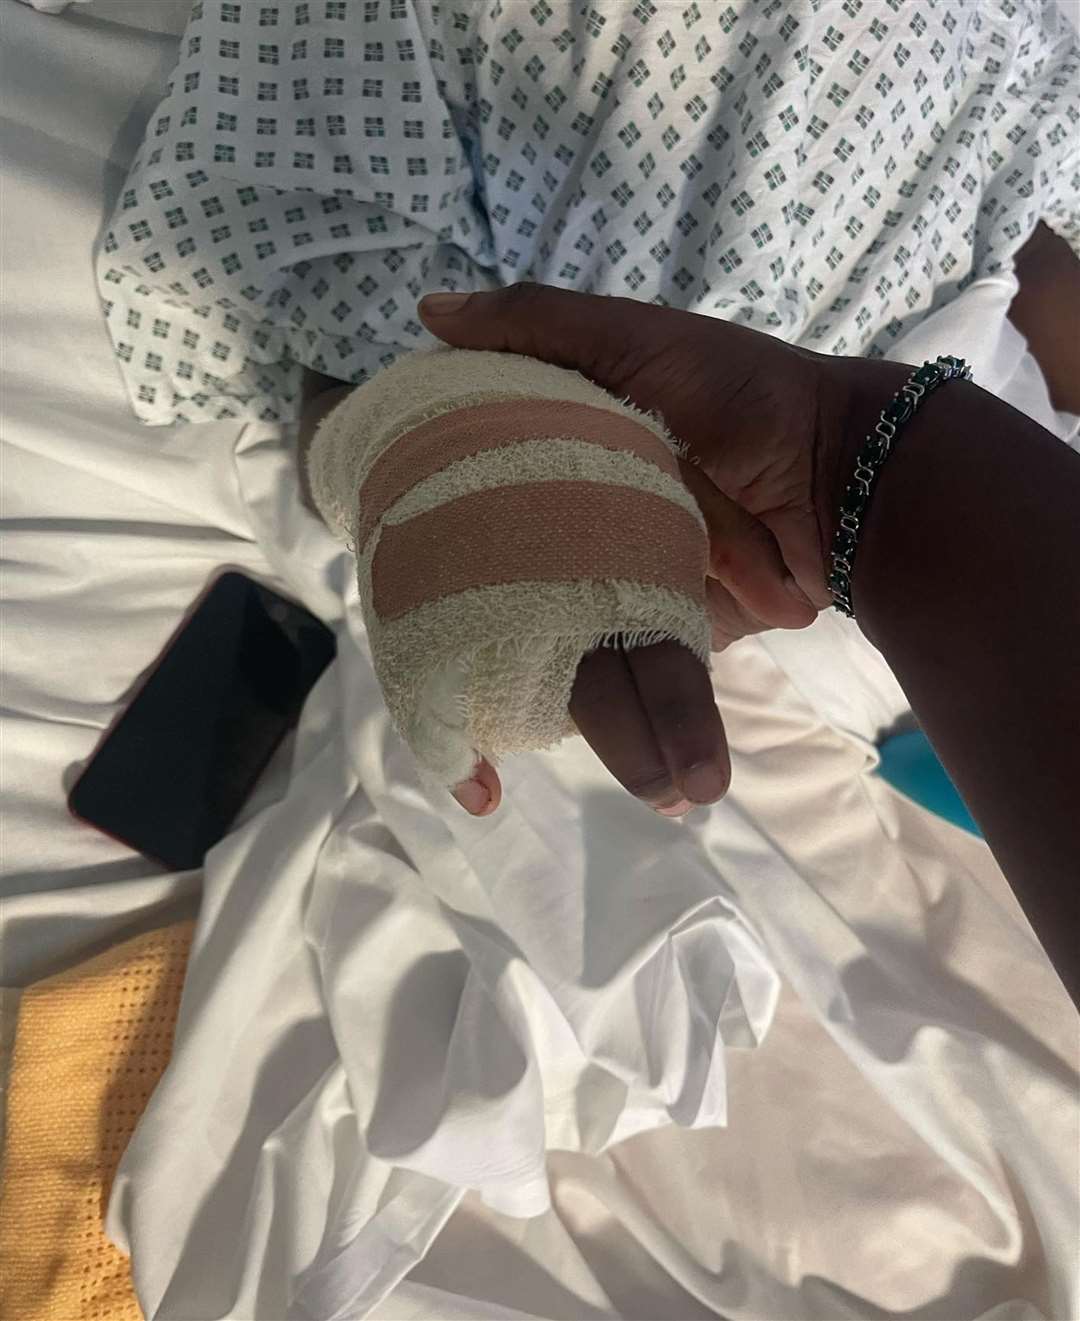 Raheem Bailey had his finger amputated (PA)